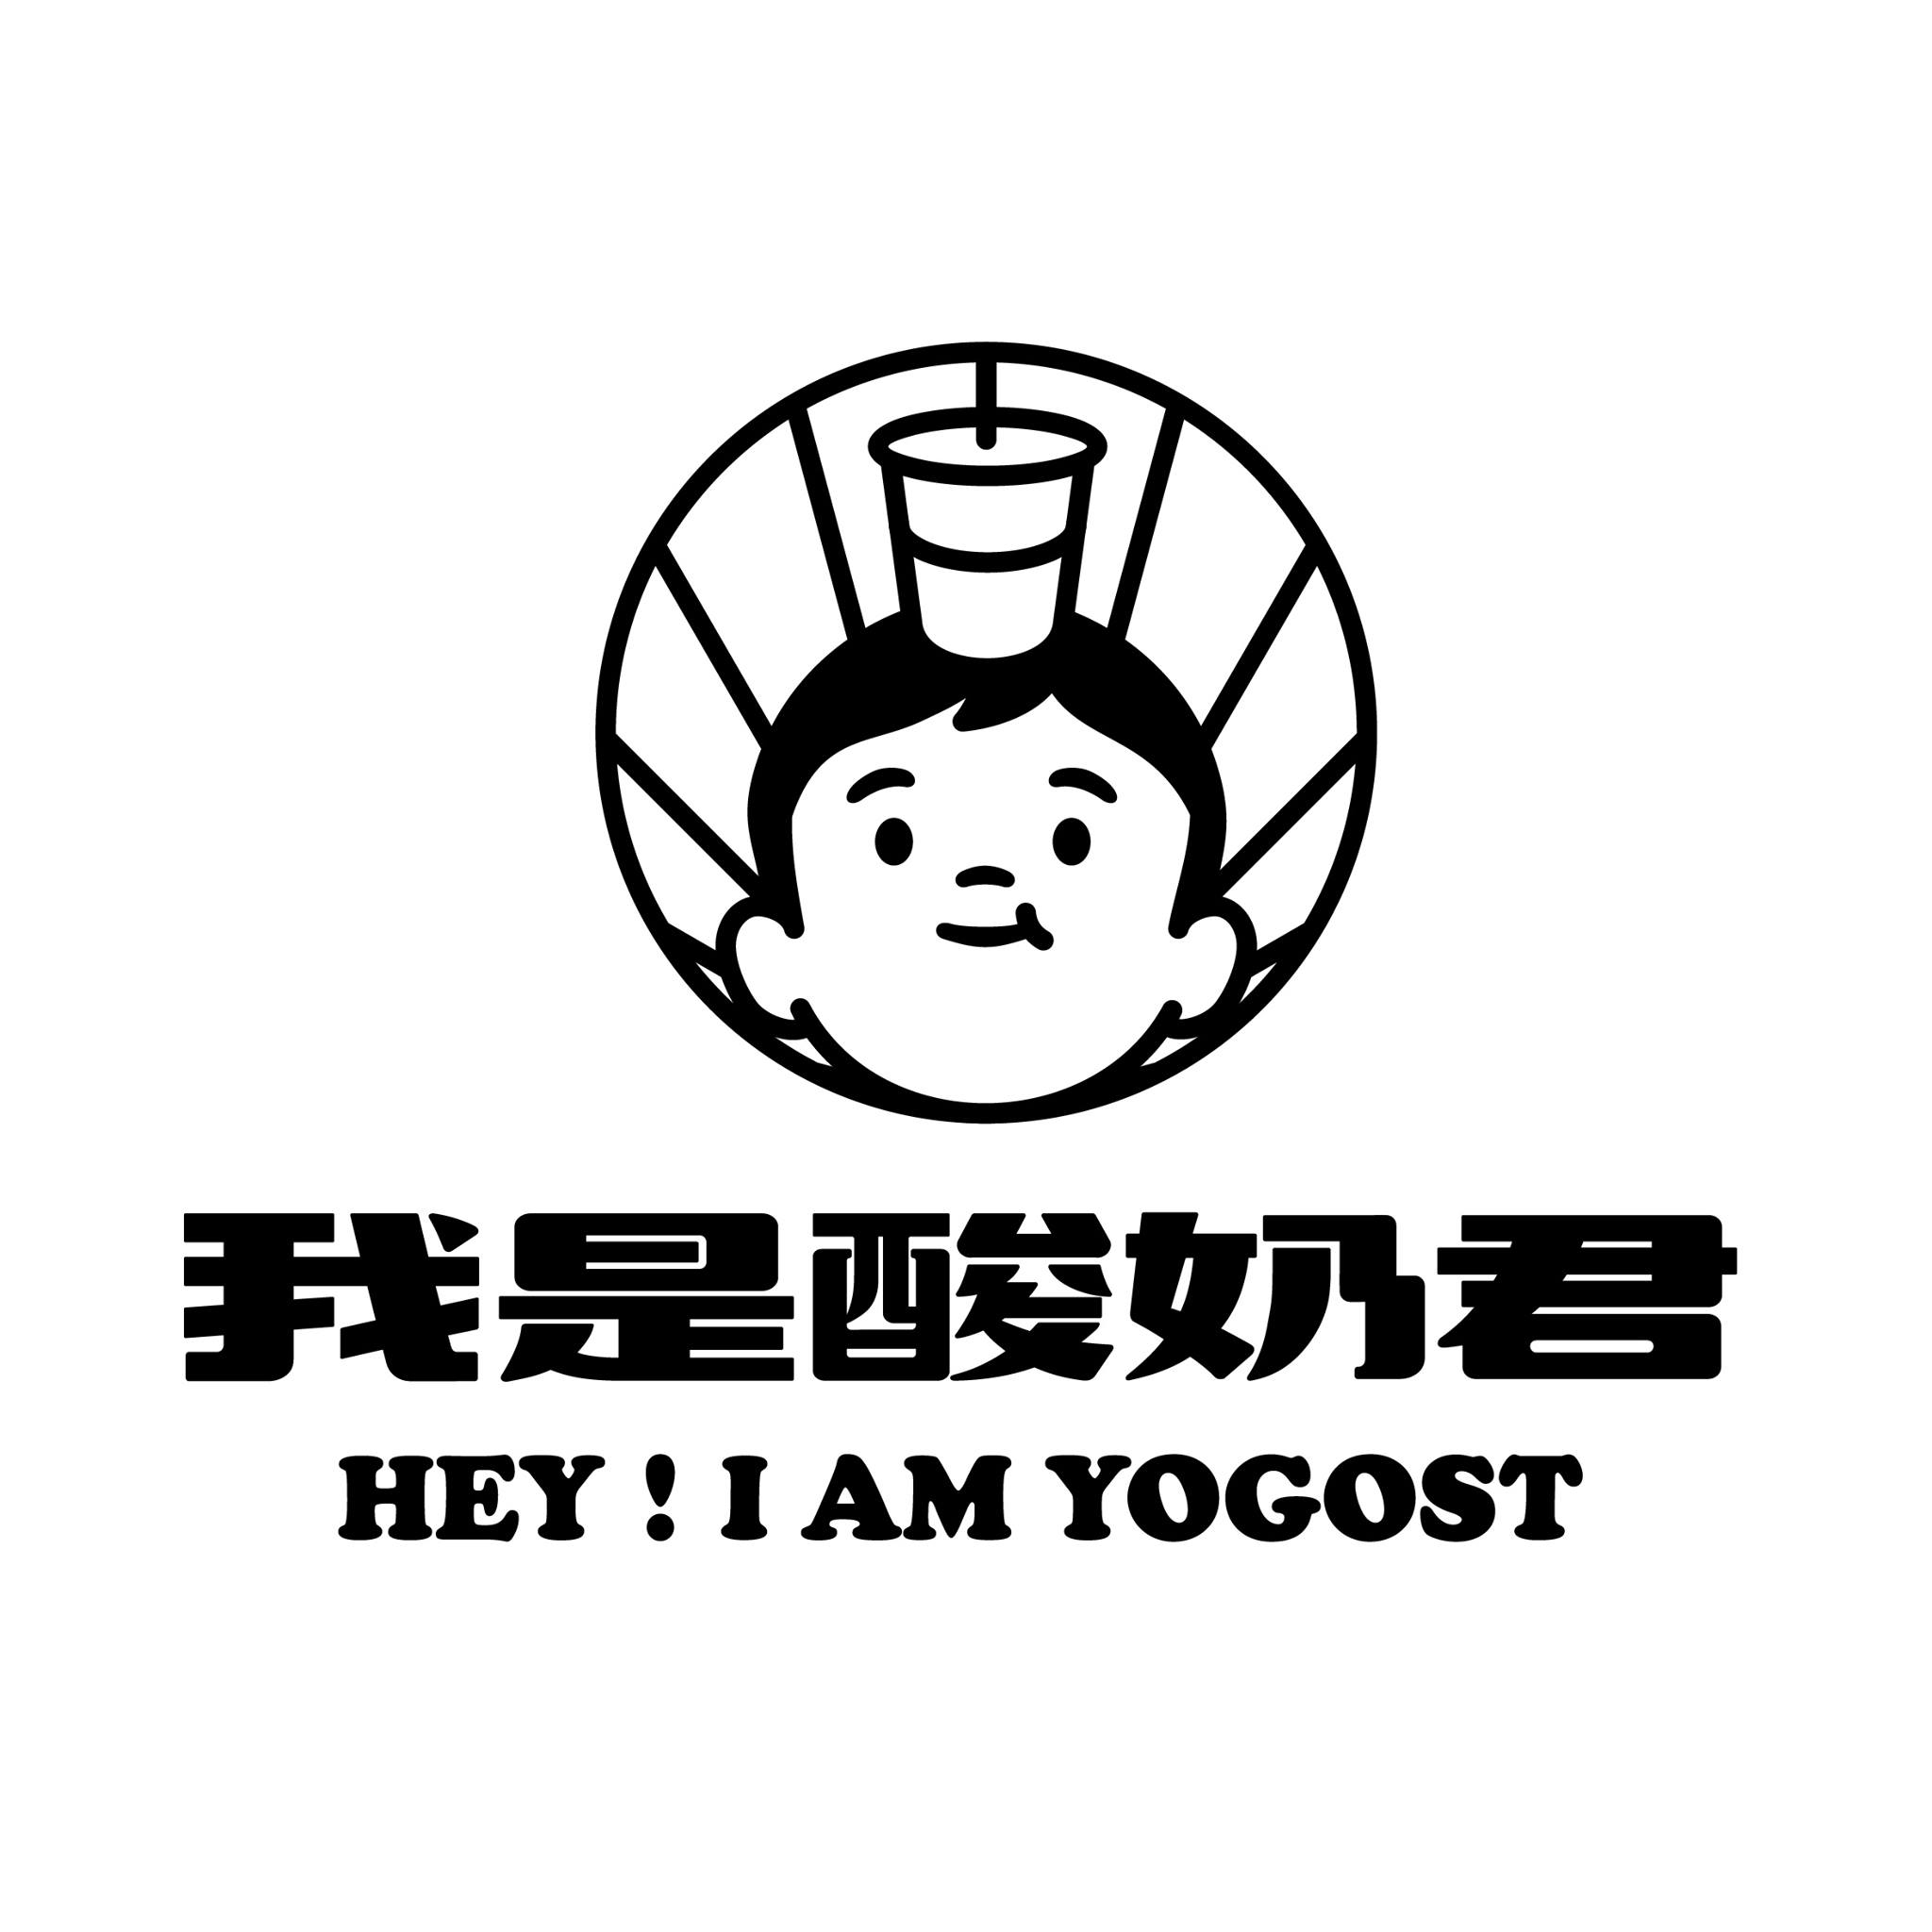 Hey I am Yogost - Logo